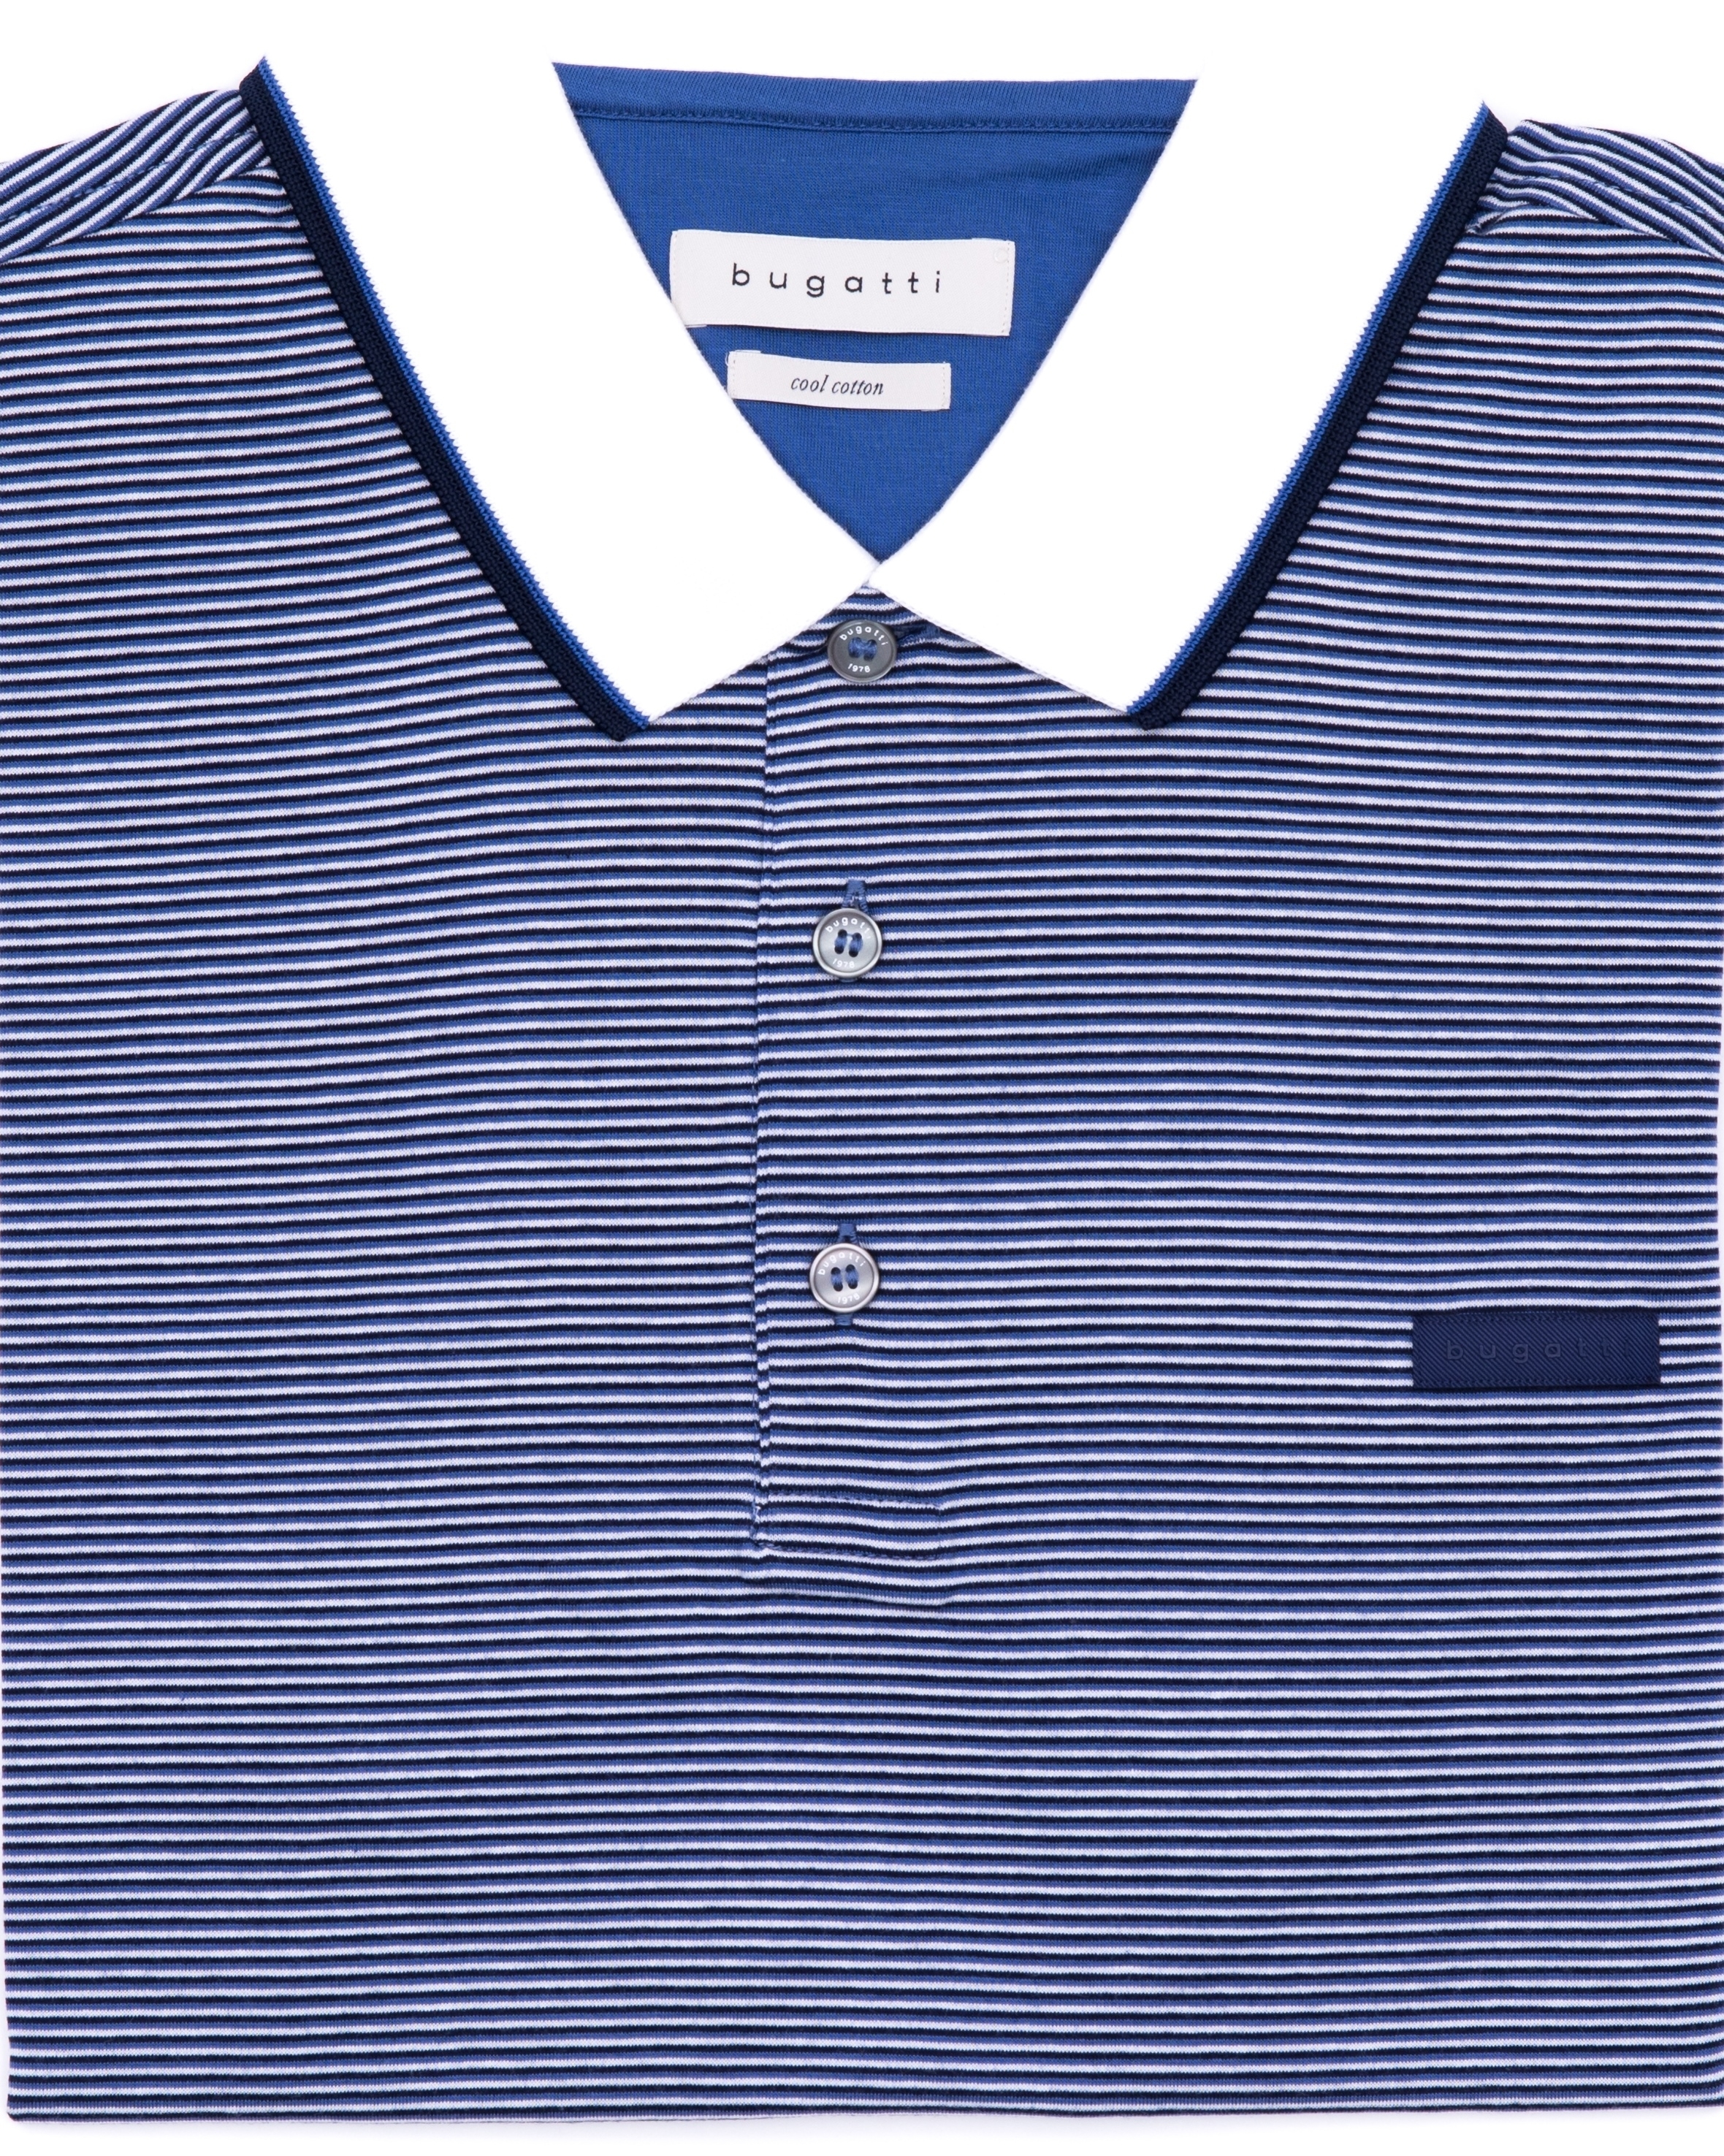 BUGATTI POLO SHIRT - CLEARANCE SALE : Digby's Menswear | Mens Clothing  Online - BUGATTI SUMMER 19